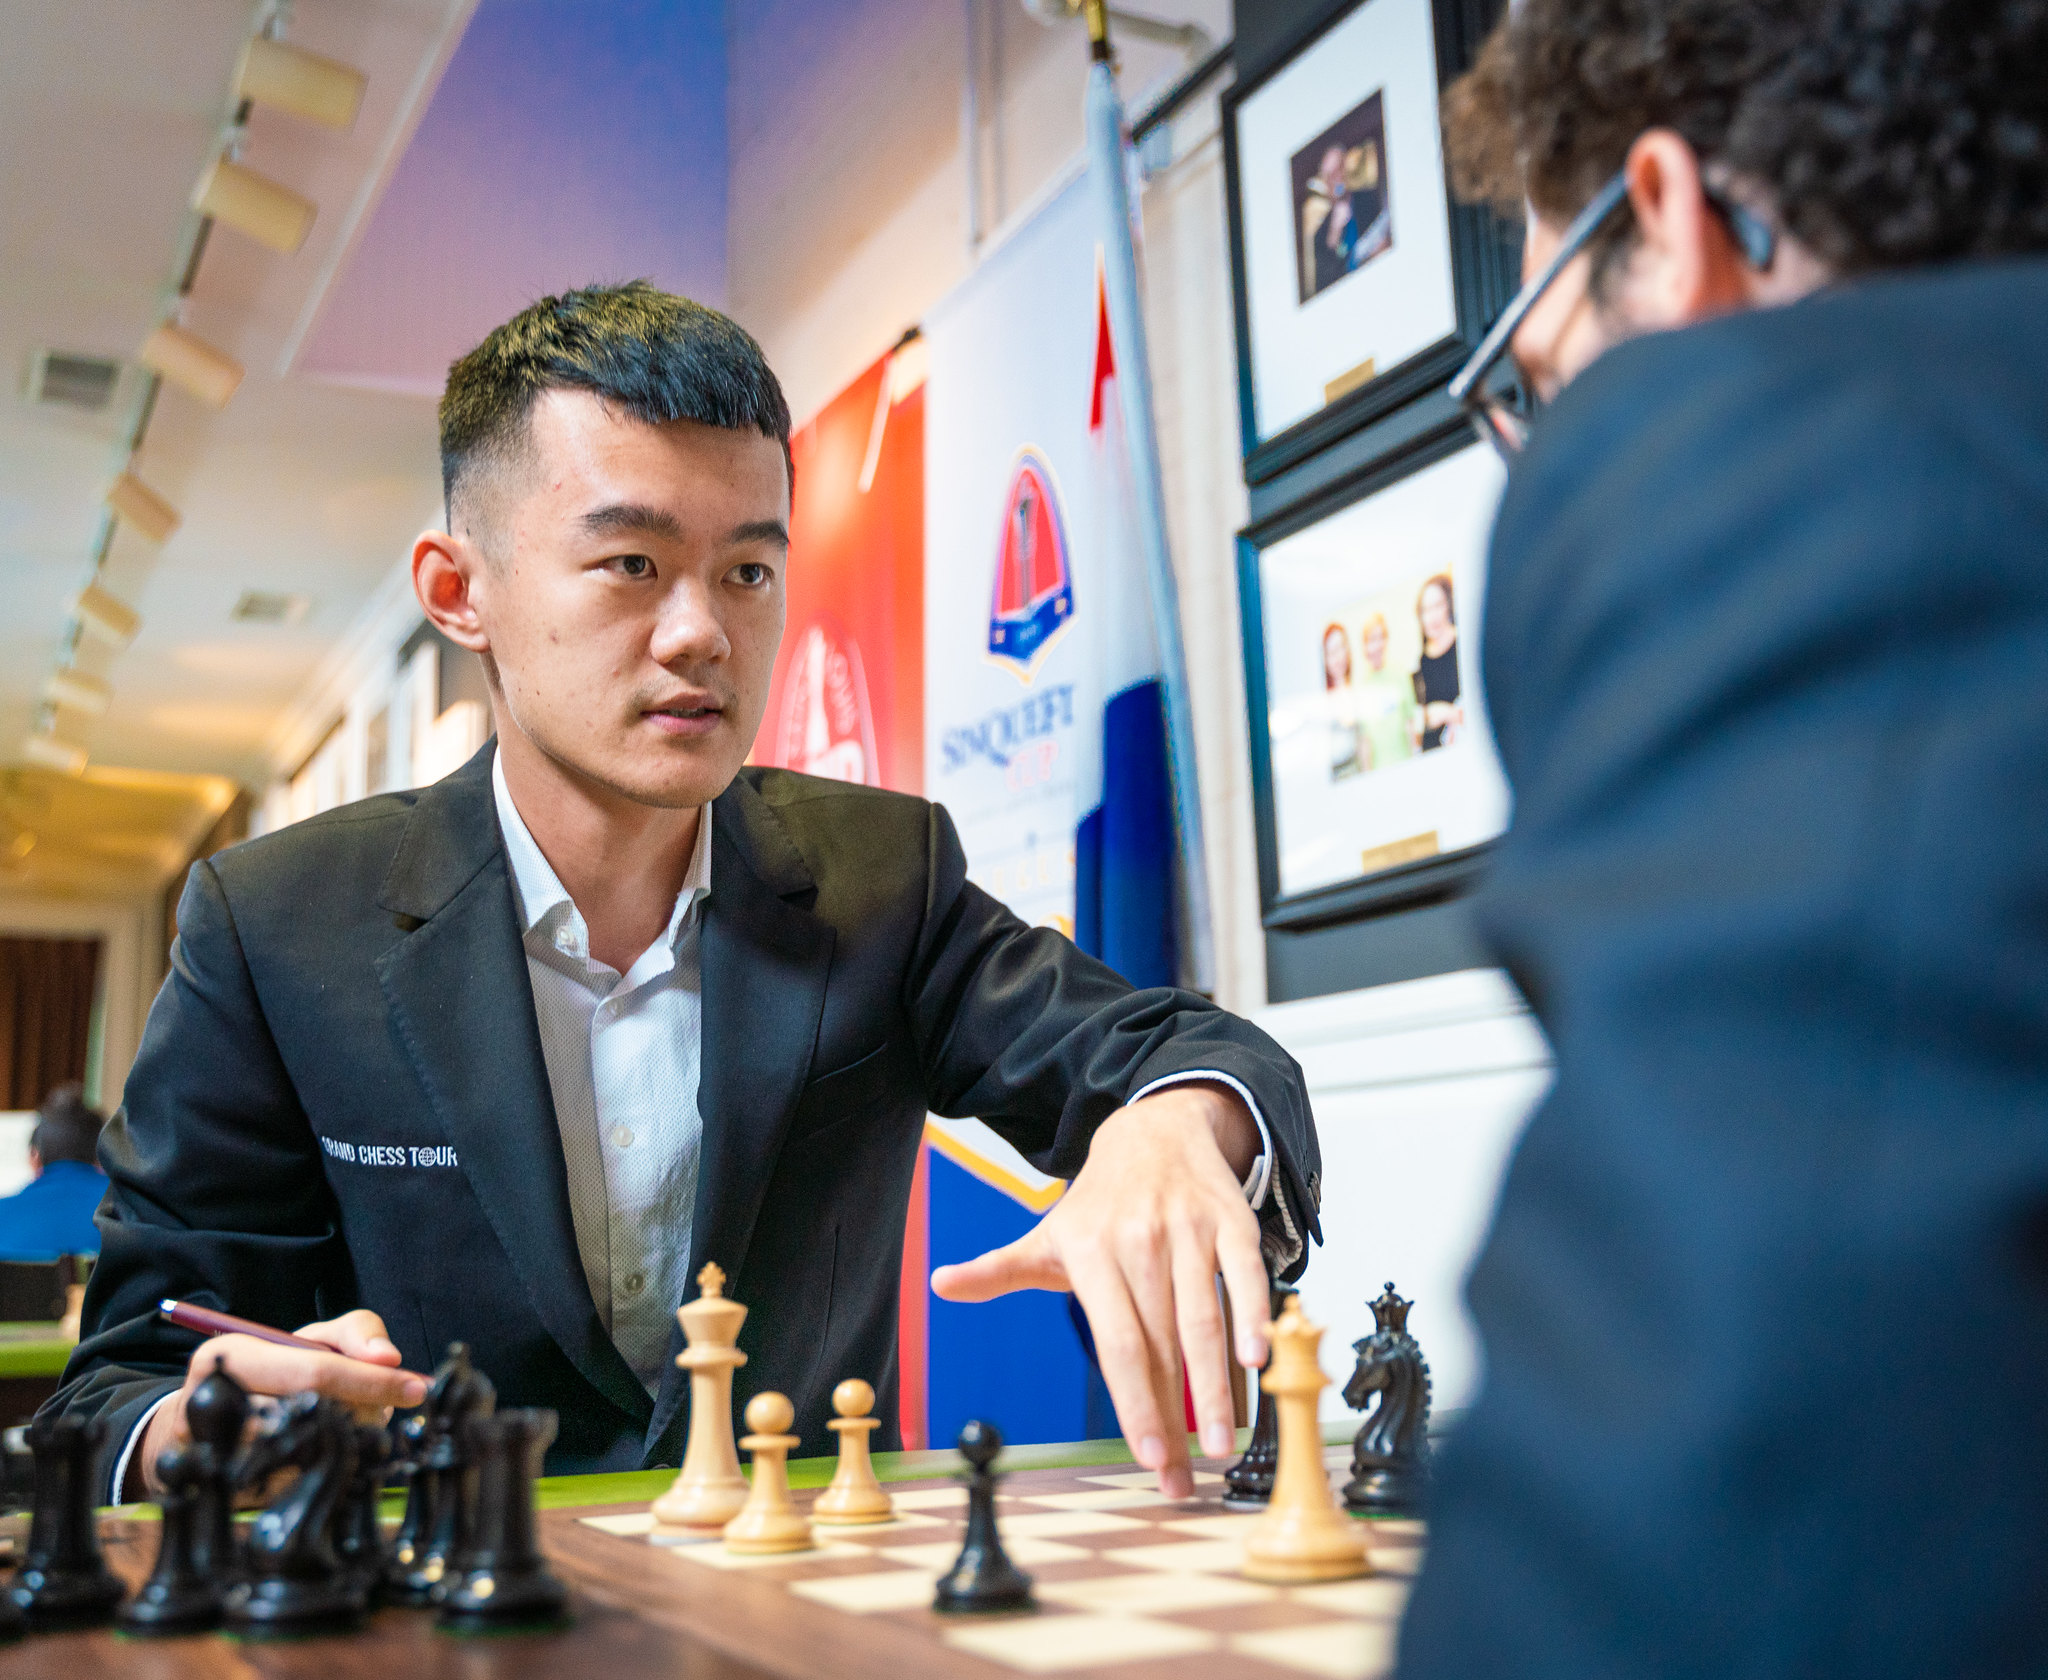 World Chess Championship 2023  Ian Nepomniachtchi vs Ding Liren